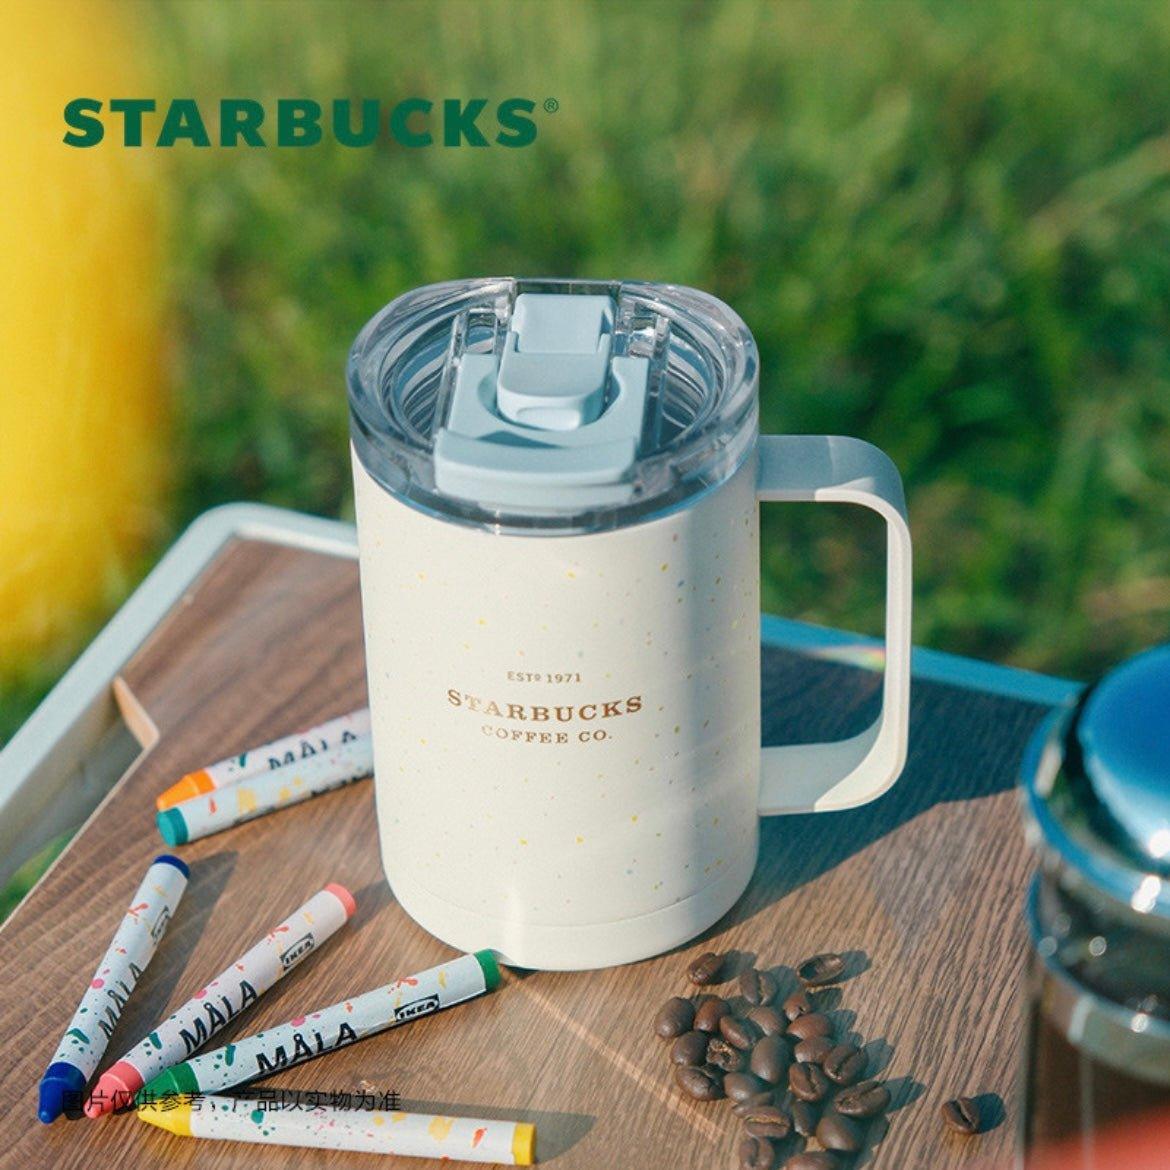 Starbucks 425ml/14oz Minimalistic Stainless Steel Double-Opening Travelling Mug - Ann Ann Starbucks